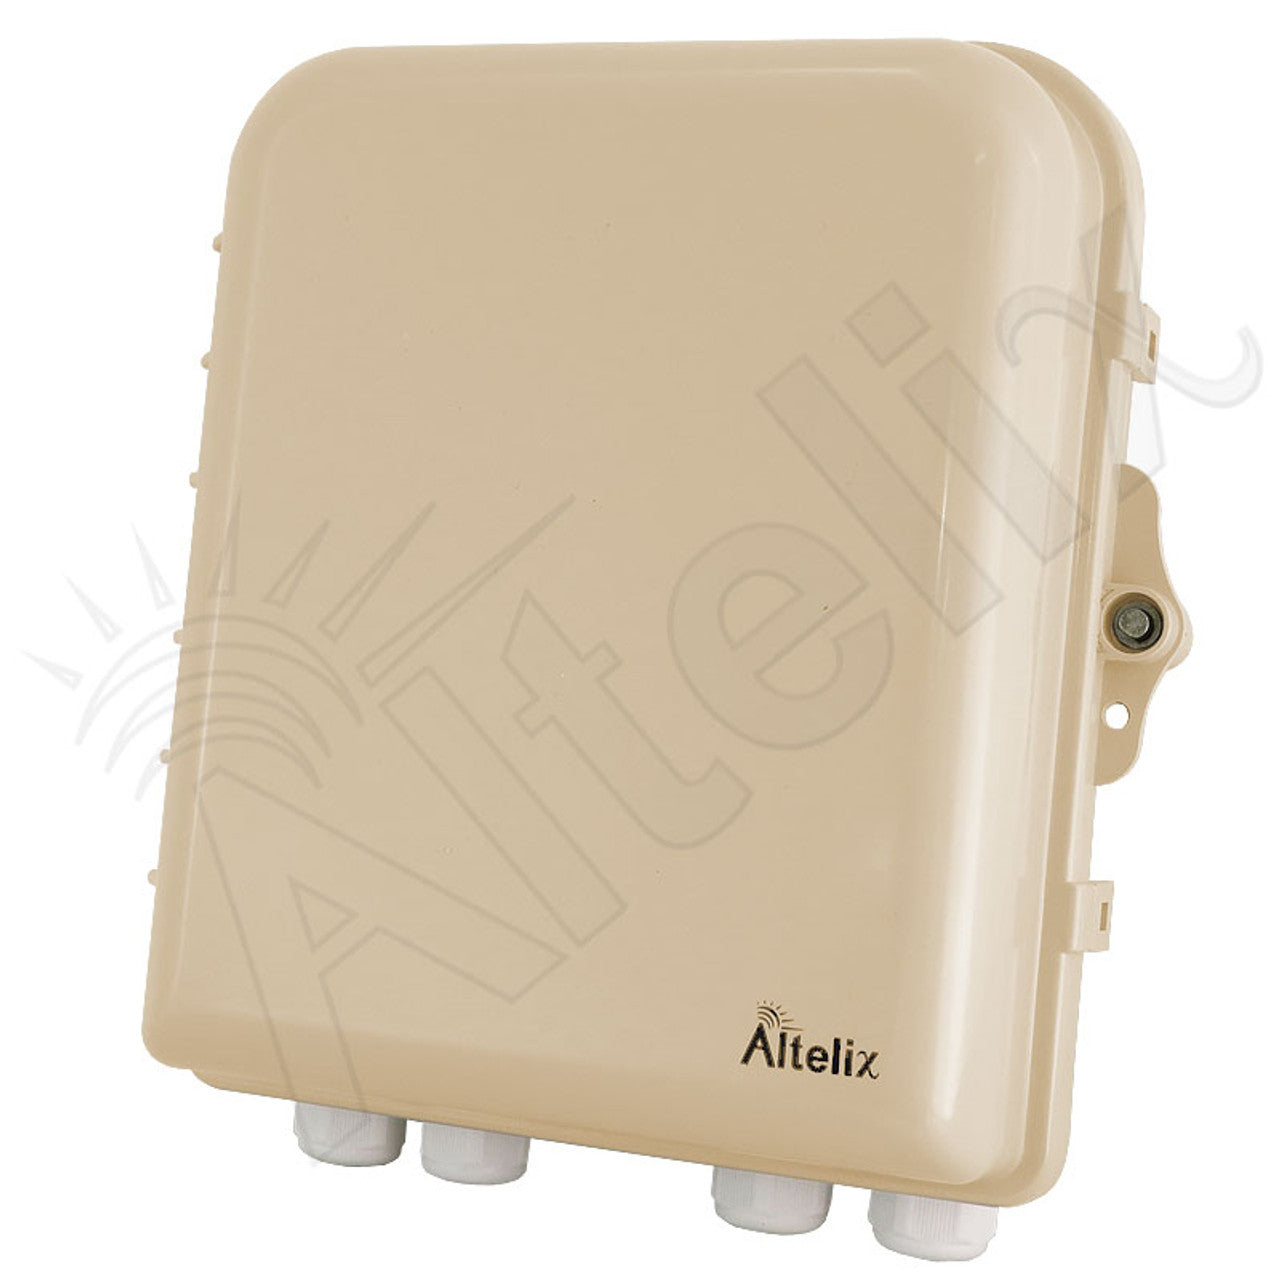 Buy light-ivory Altelix 10x9x4 IP66 NEMA 4X PC+ABS Weatherproof Utility Box with Hinged Door and Aluminum Mounting Plate